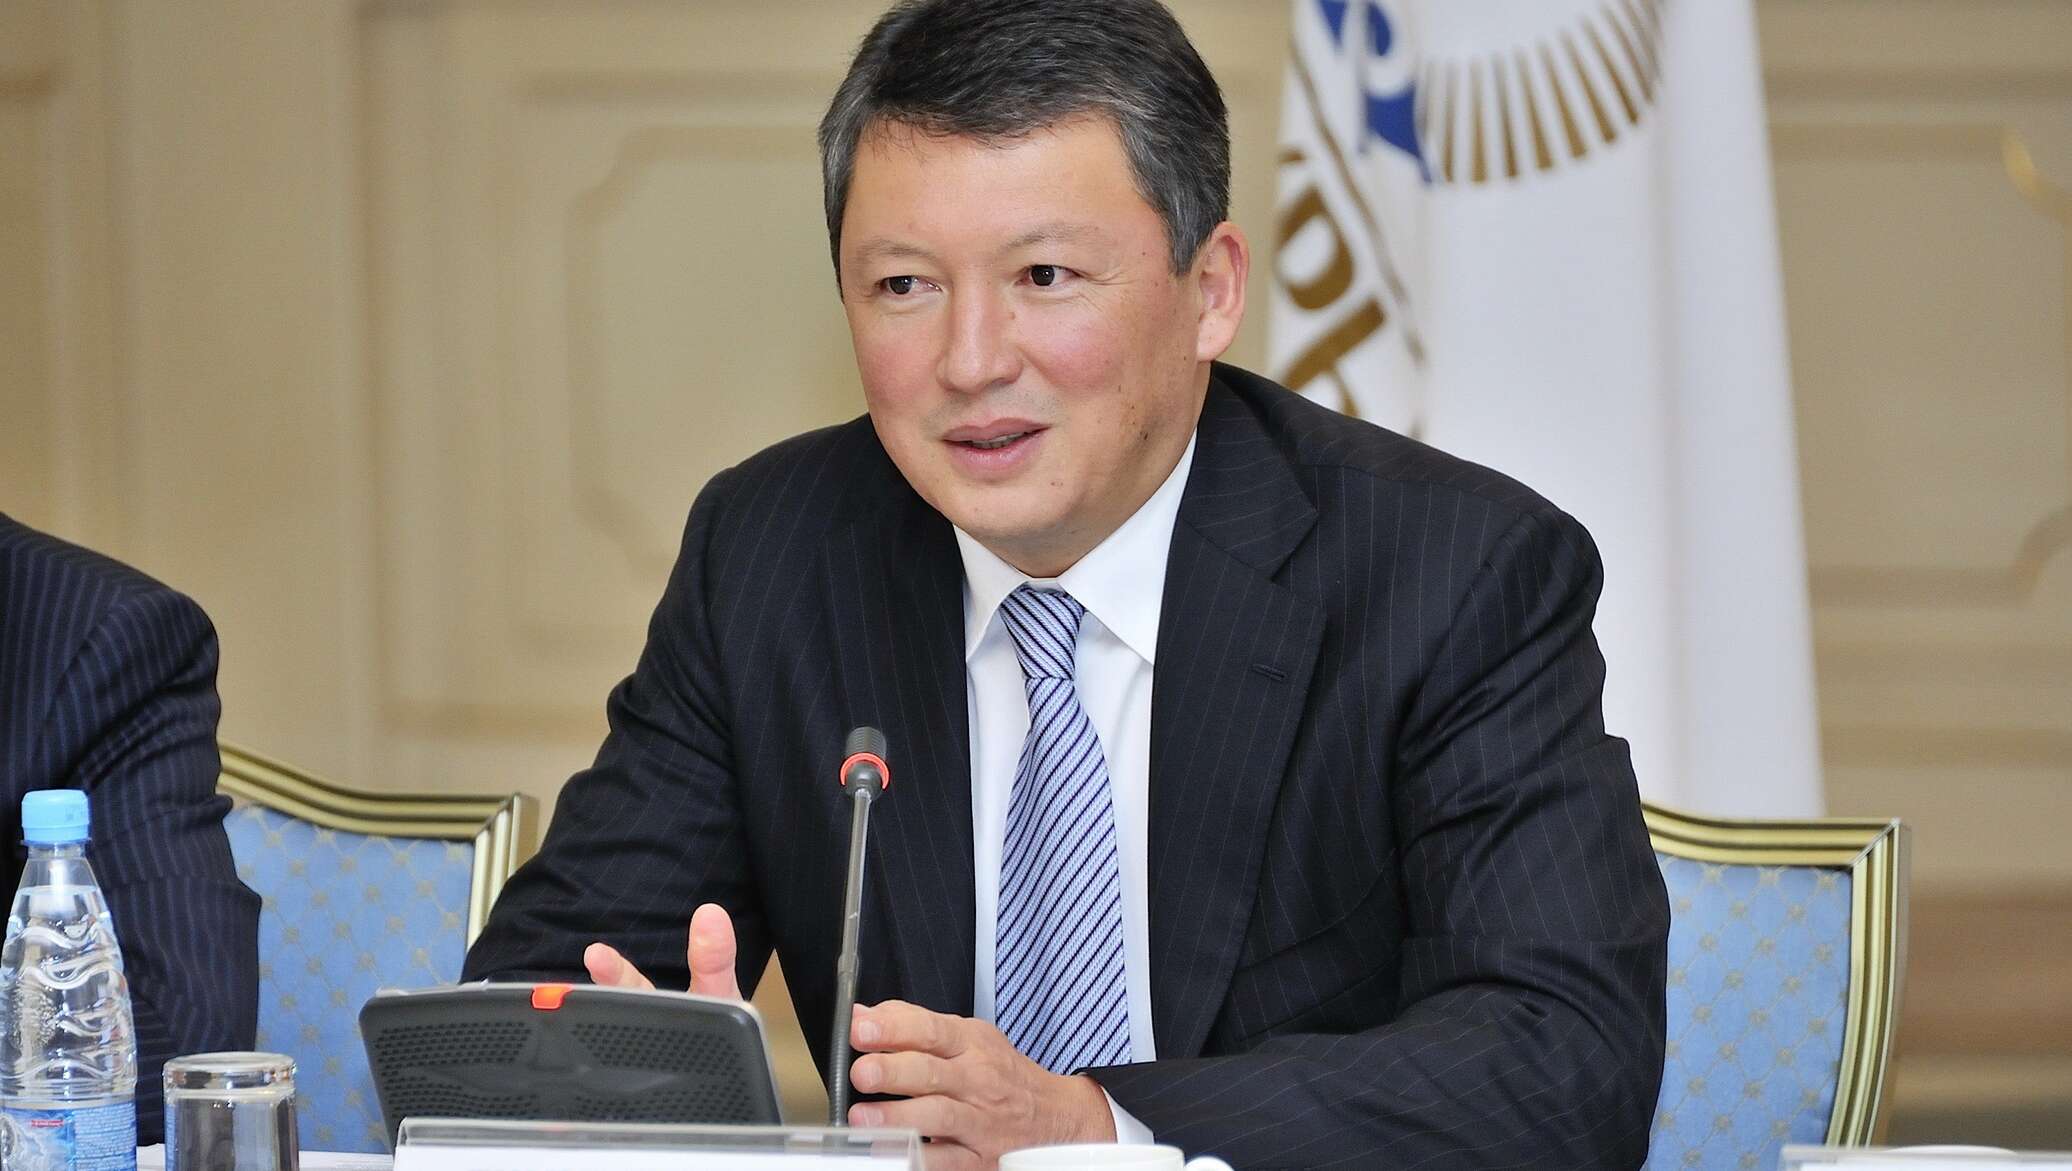 Тимур кулибаев казахстан